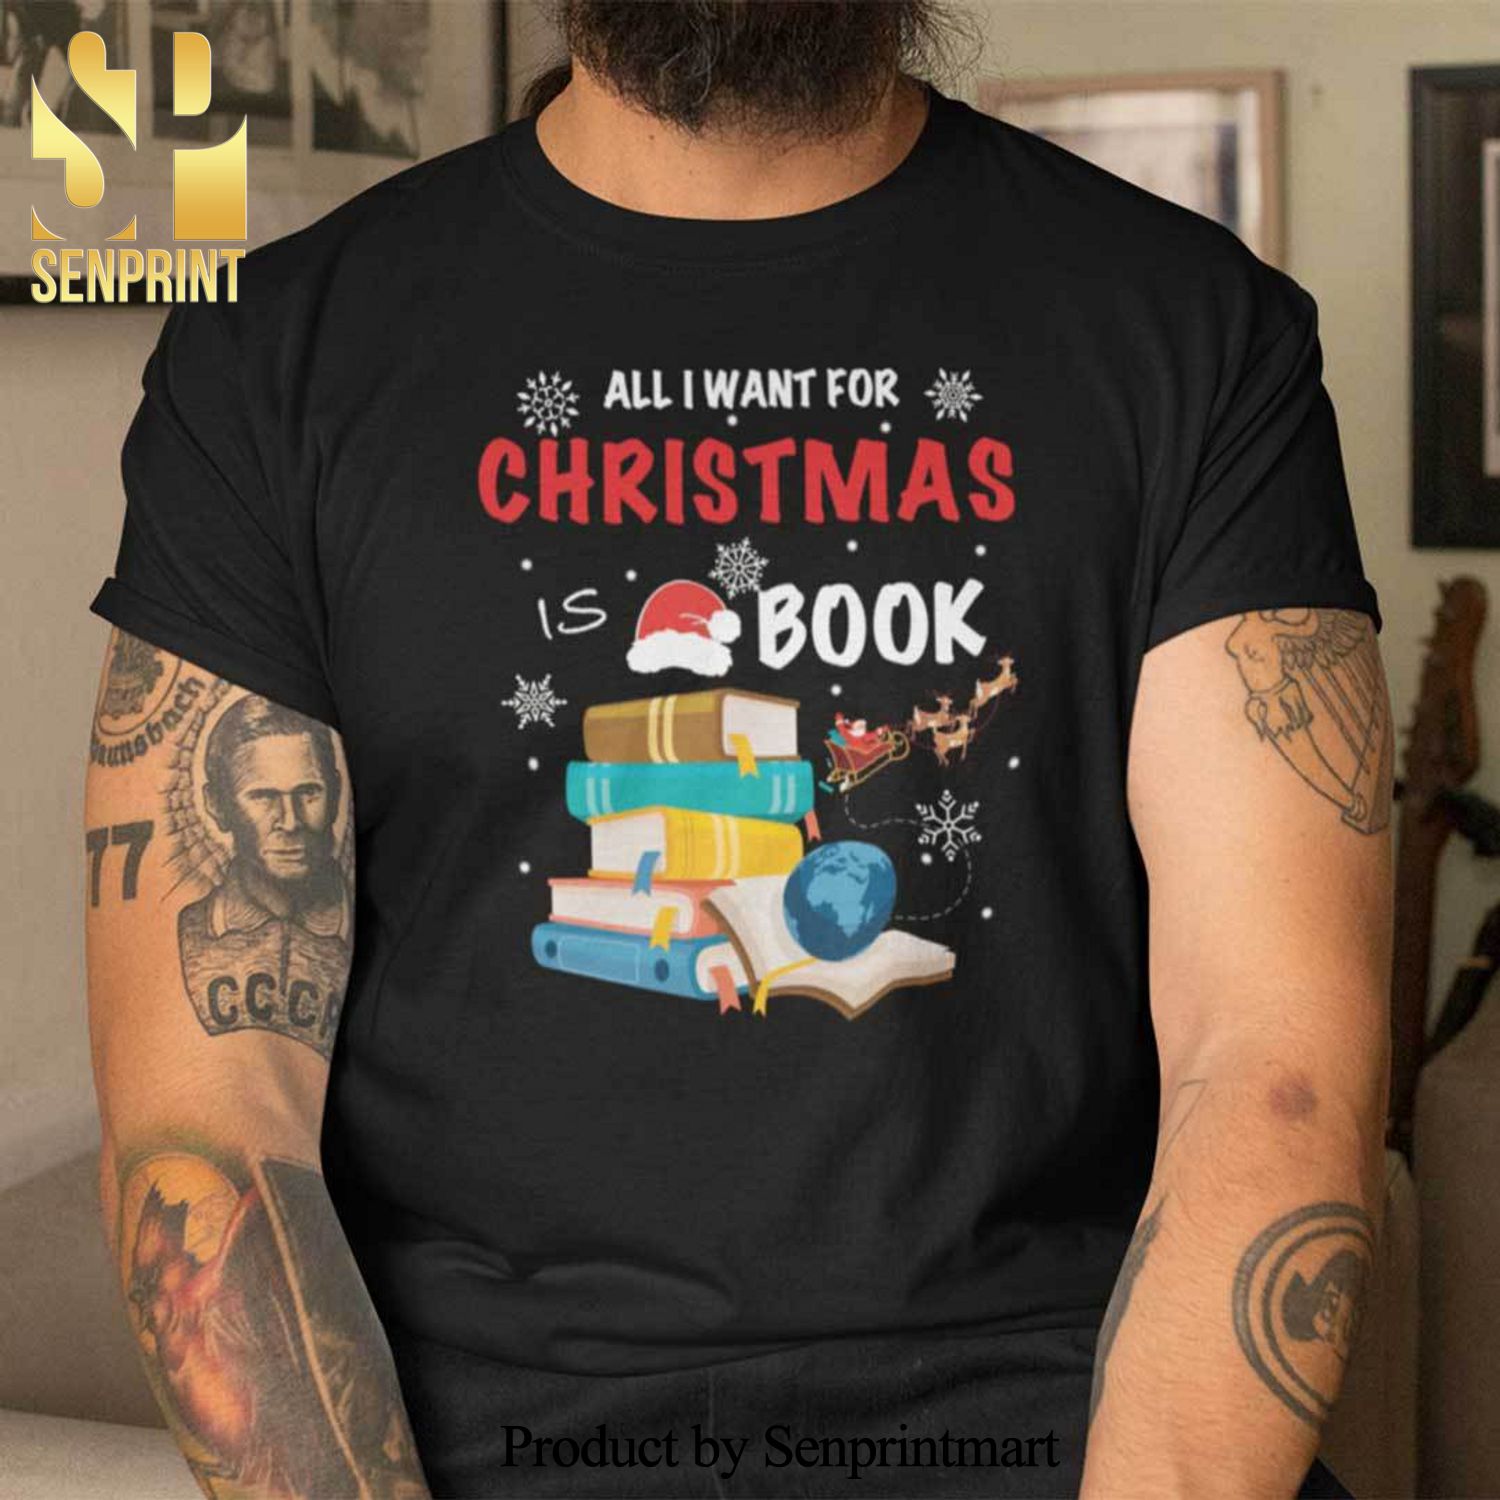 Book Christmas Tree Christmas Gifts Shirt All I Want For Christmas Is Book